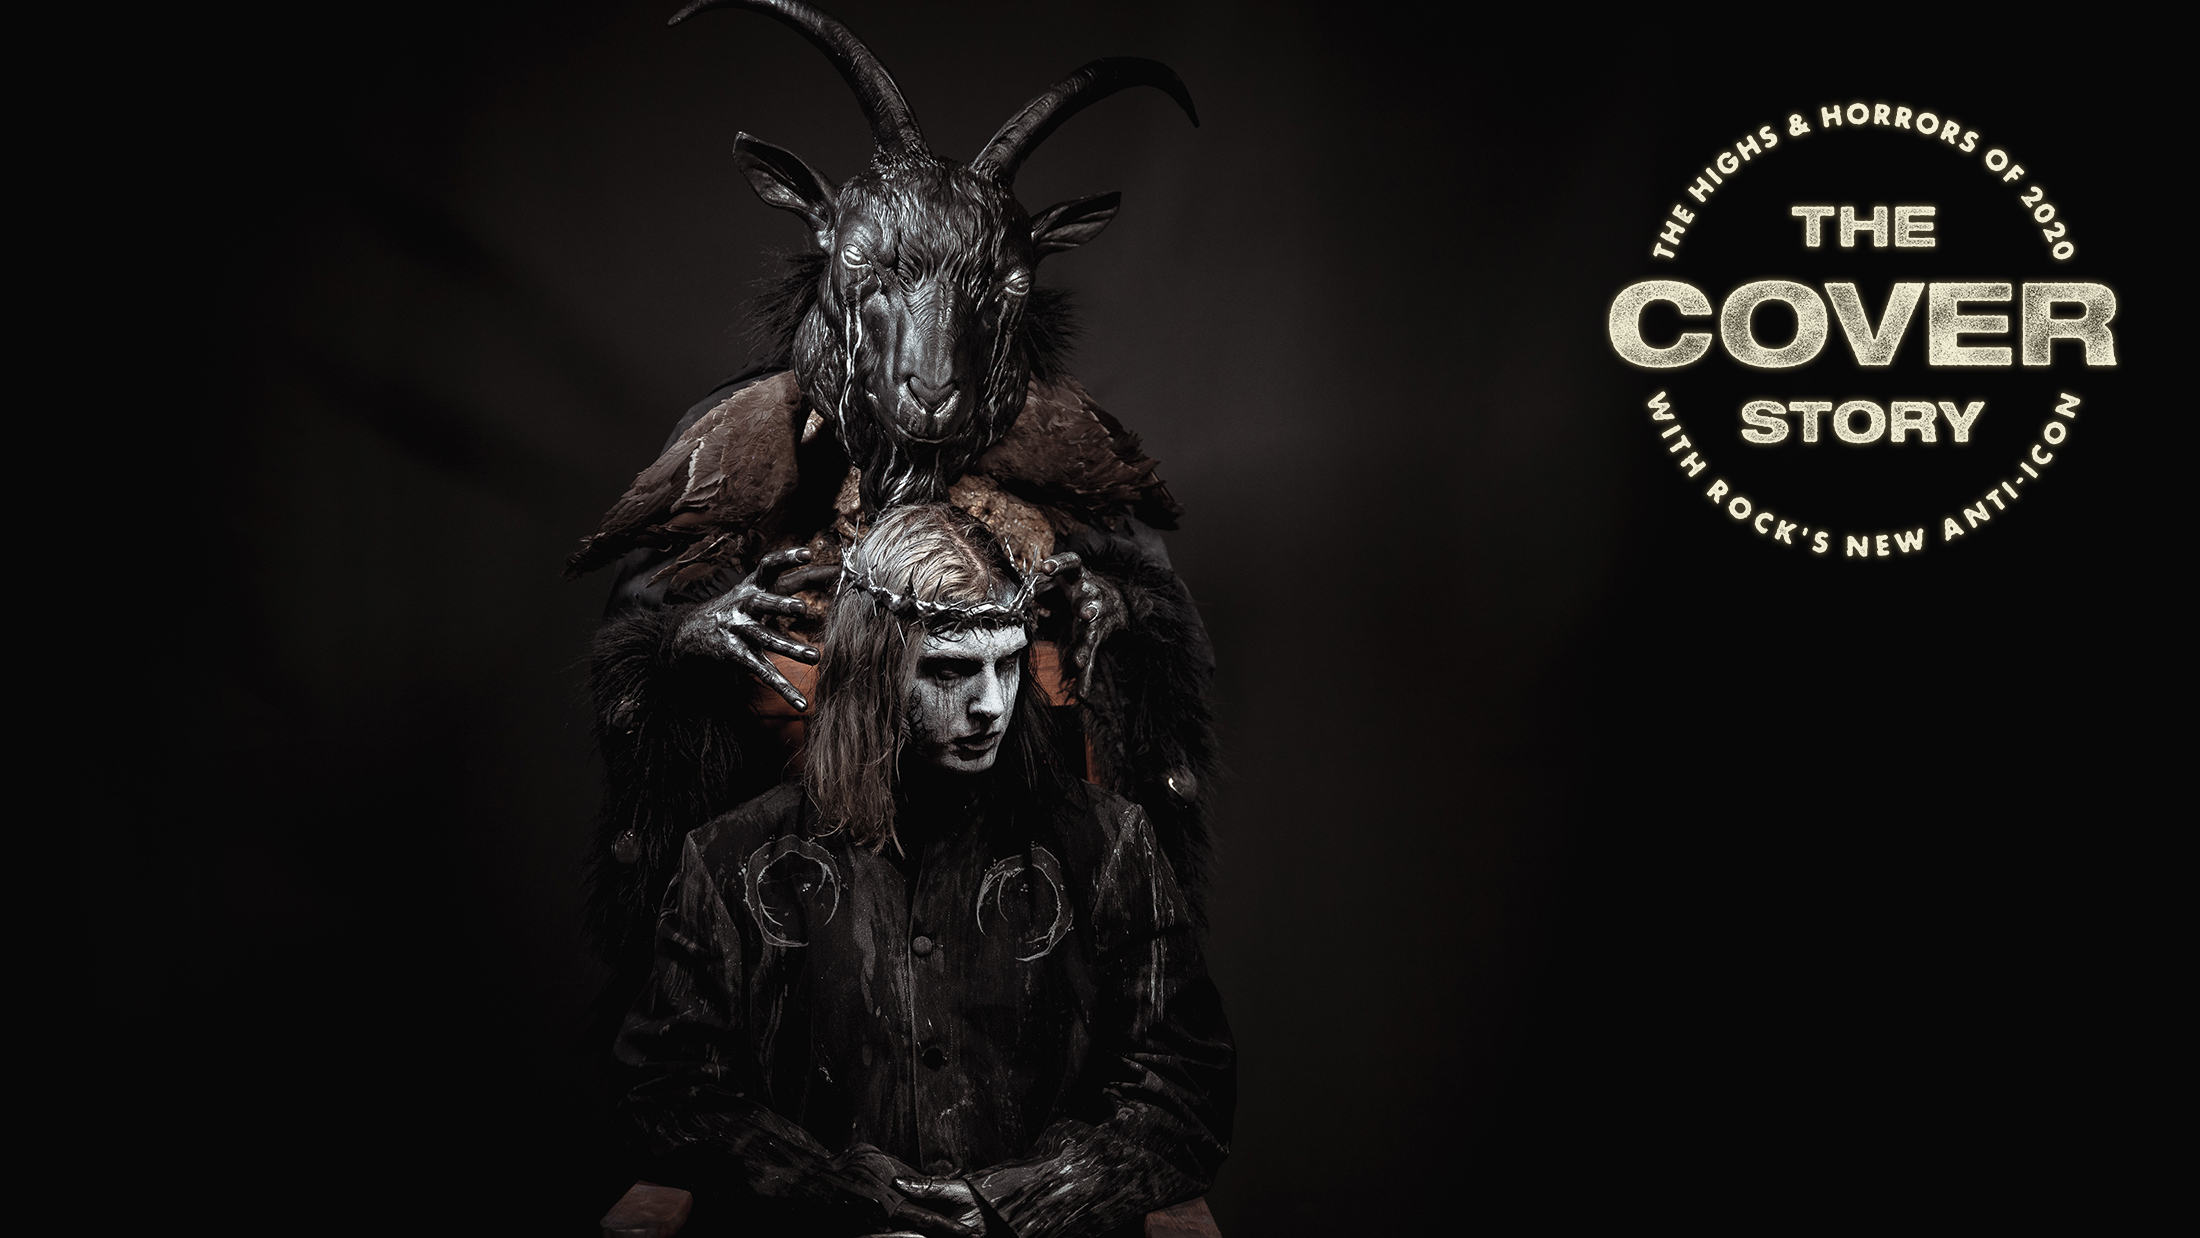 Ghostemane Debut New Zealand Show Announced - Music News at Undertheradar